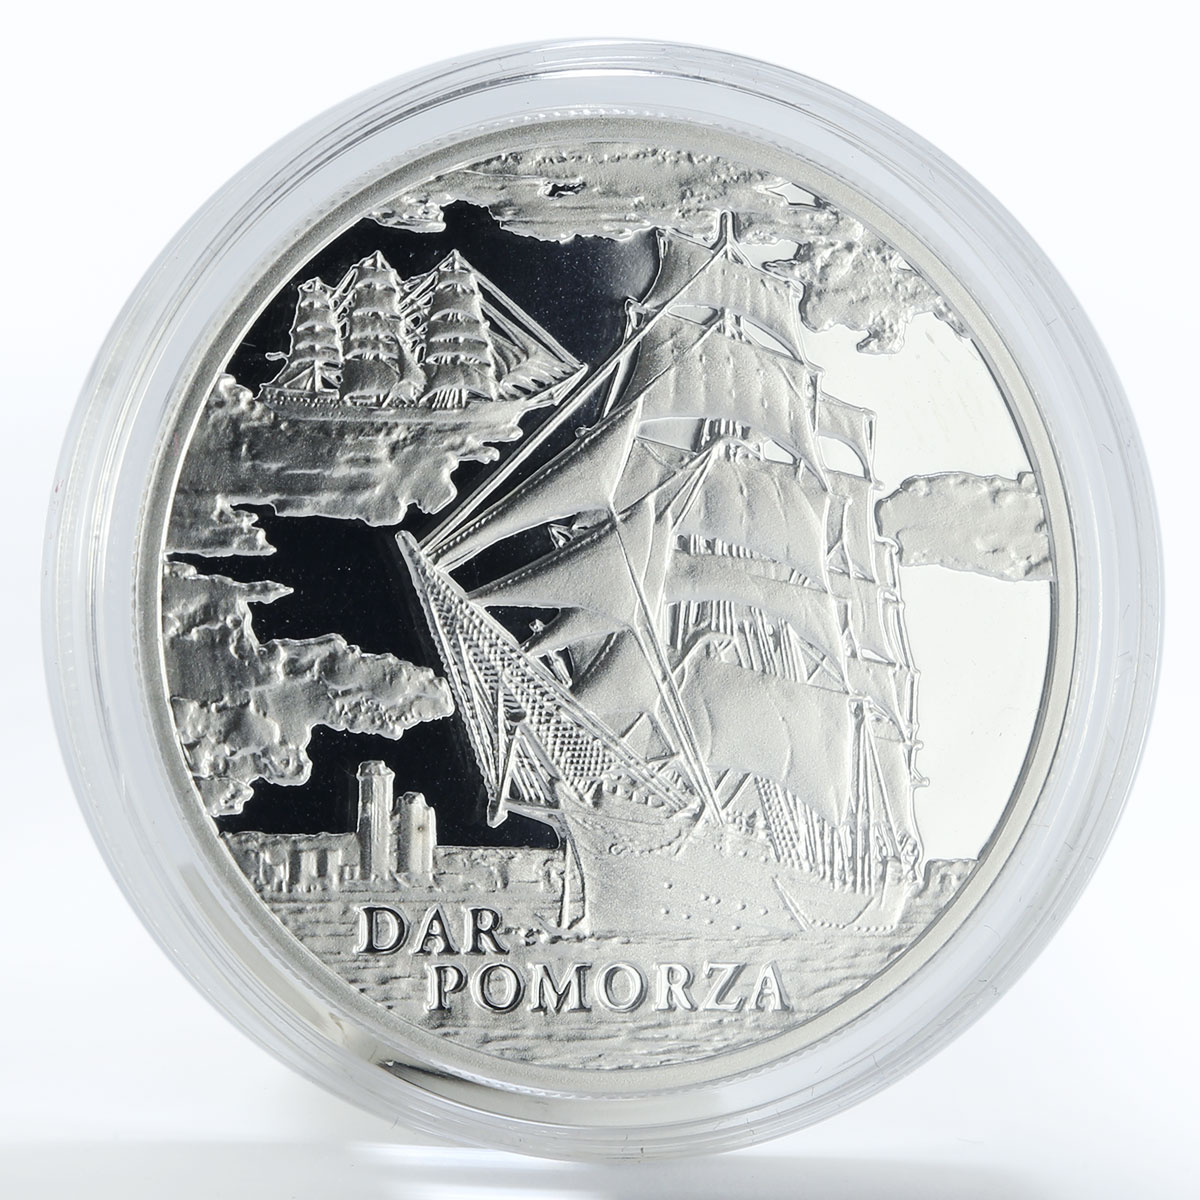 Belarus 20 rubles Sailing Ships Dar Pomorza silver coin 2009